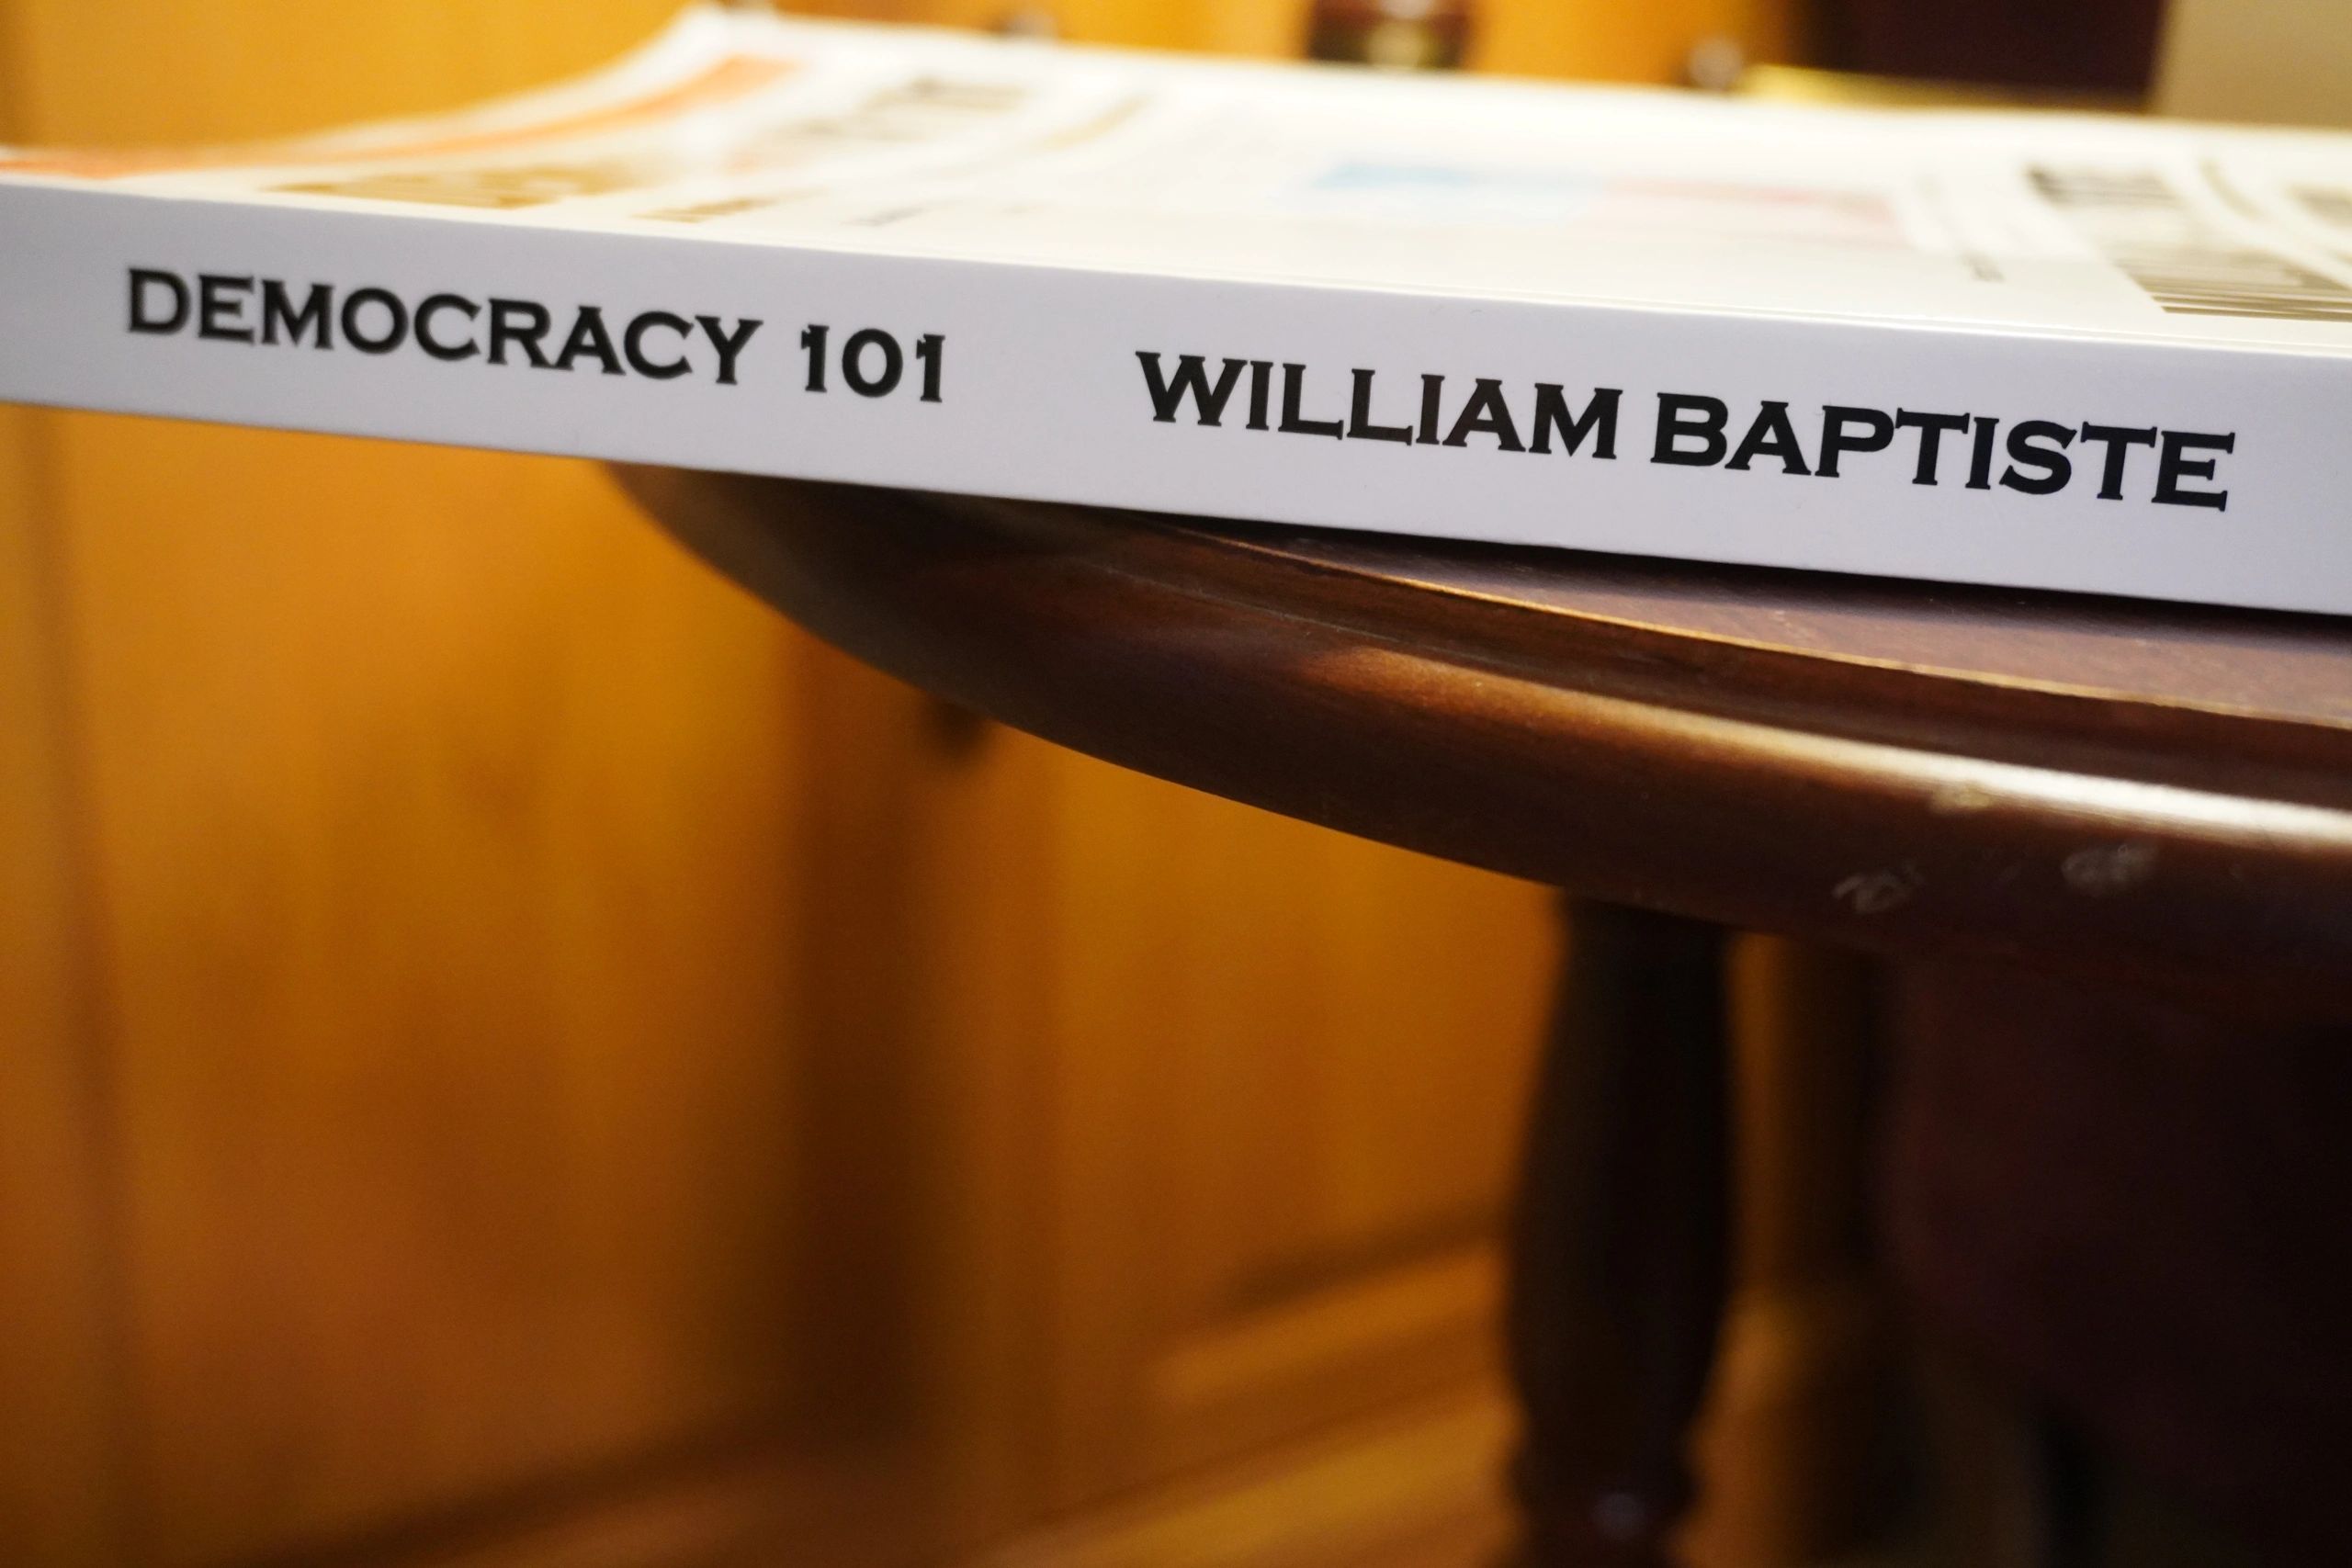 DEMOCRACY 101 Book by William Baptiste